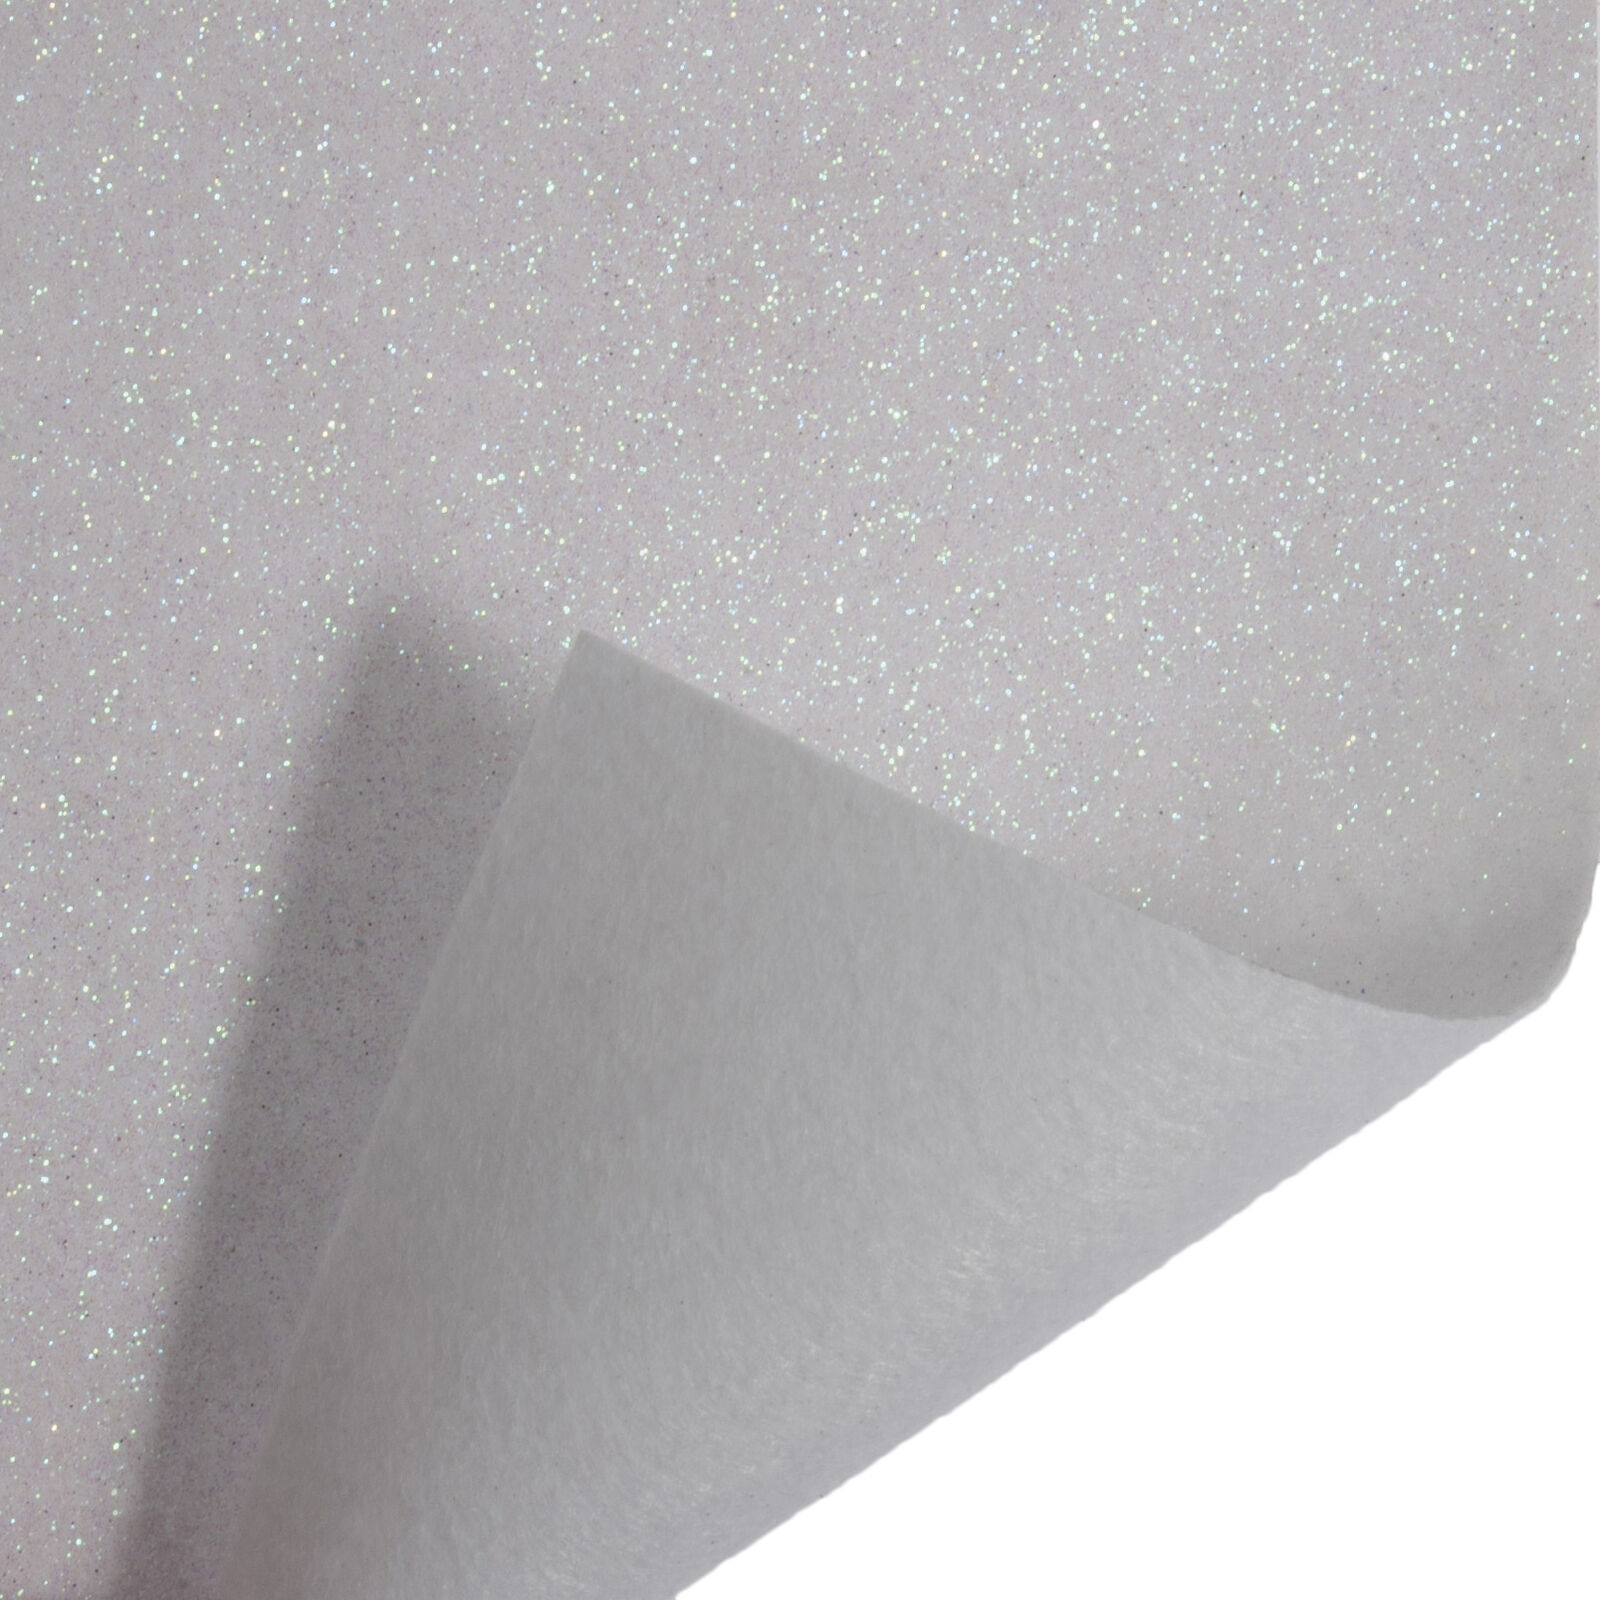 1x Glitter Felt Fabric Rolls 1mx90cm White Sewing Craft Tool Hobby Art